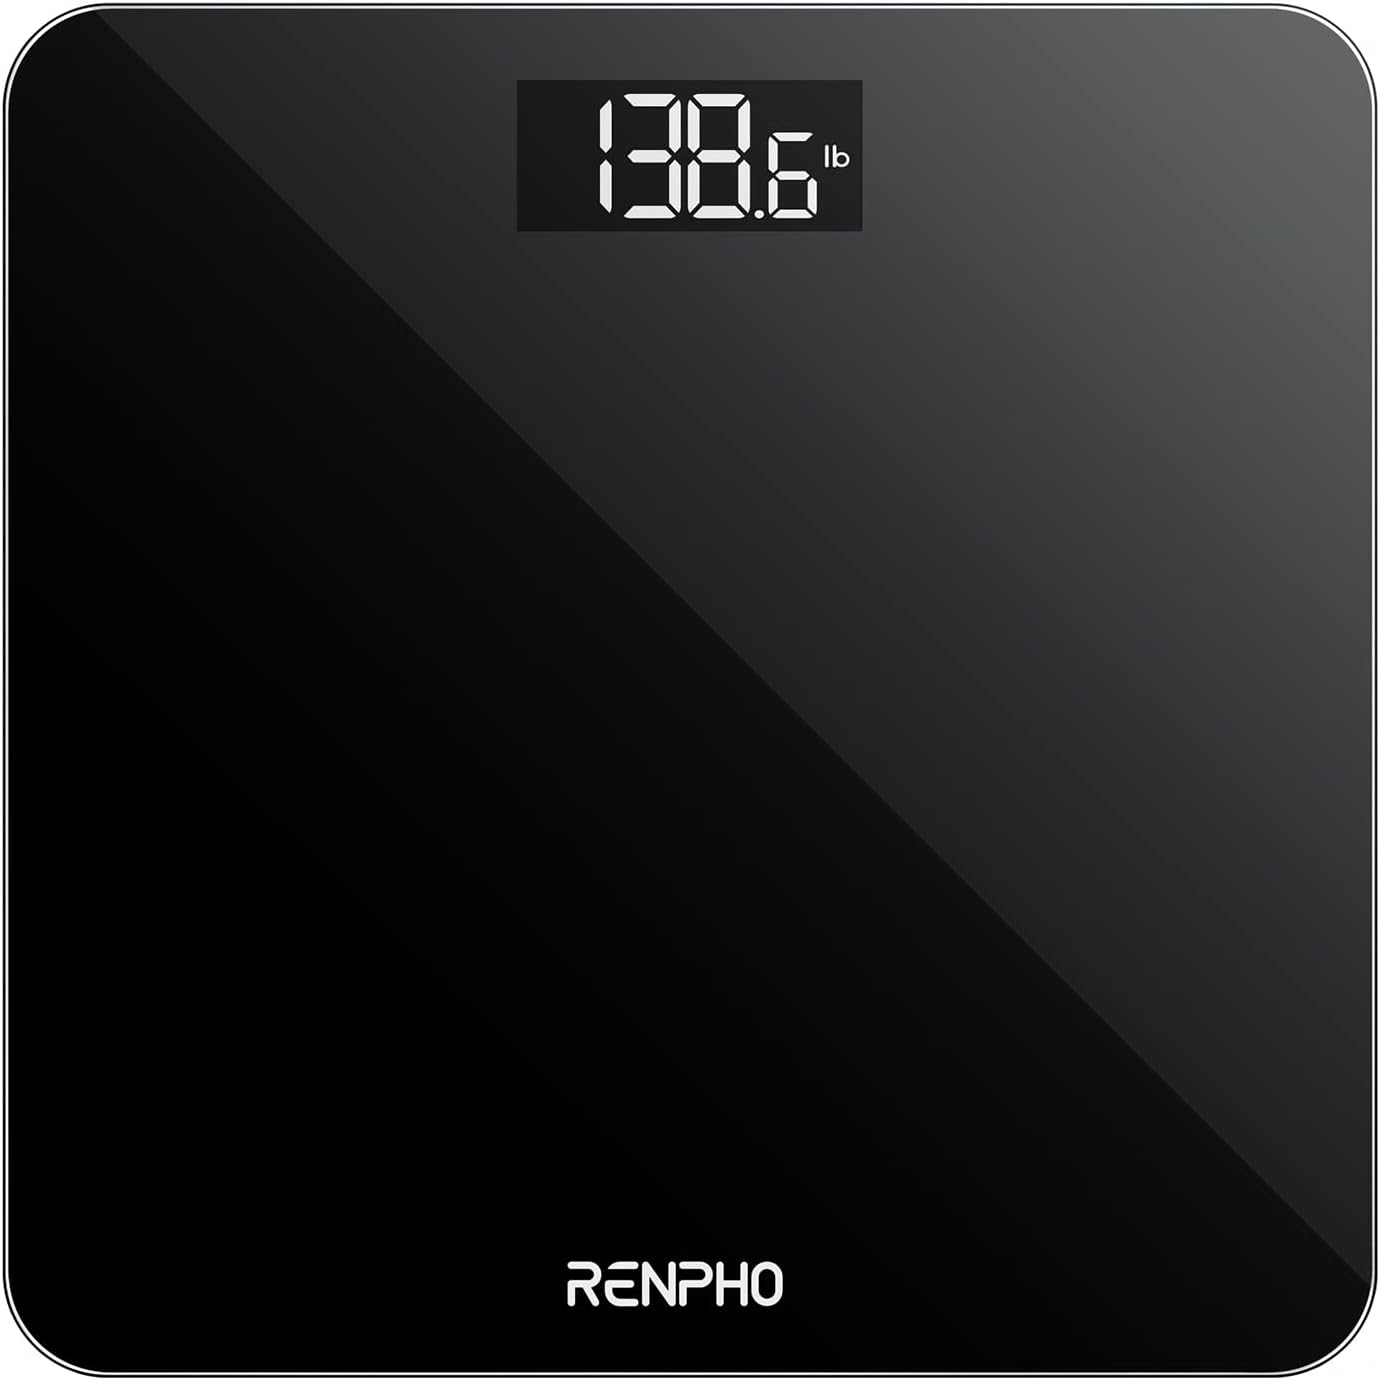 Review of RENPHO Digital Bathroom Scale, Black-Core 1S